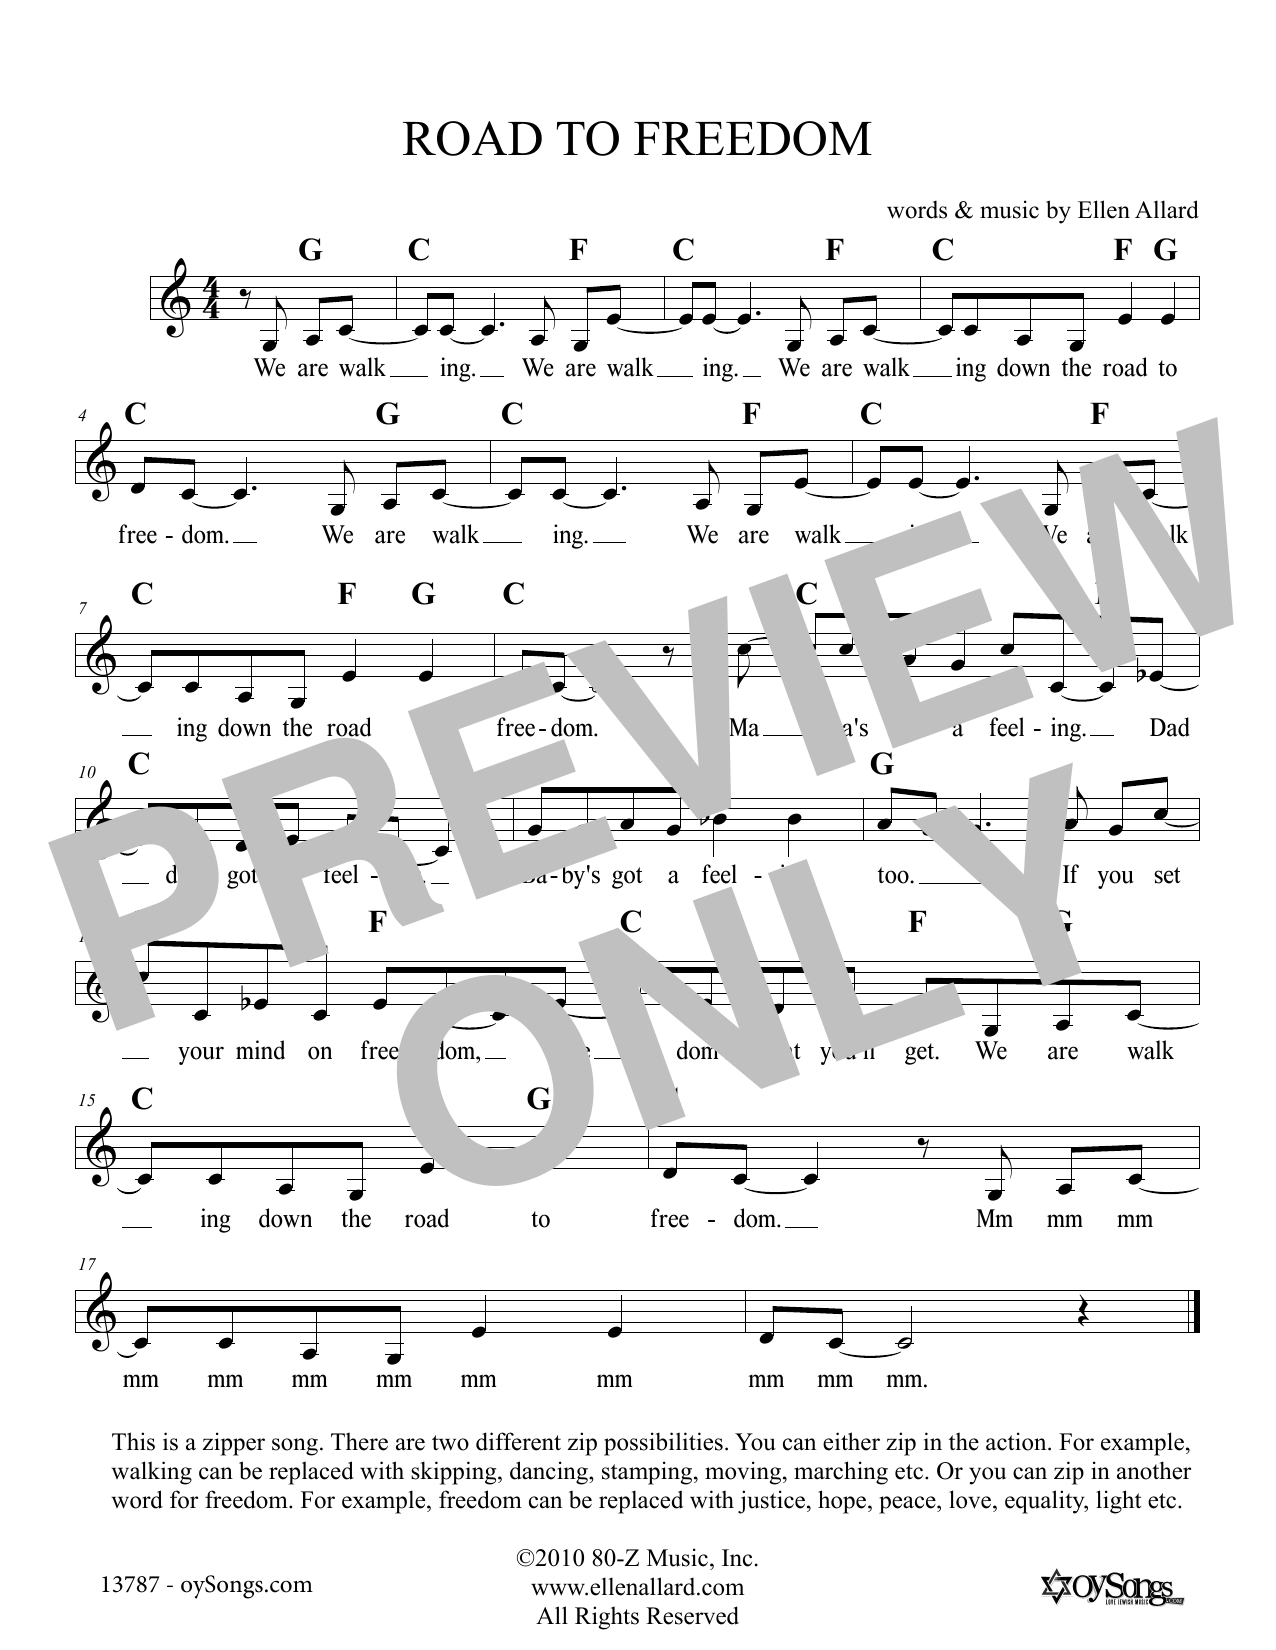 Ellen Allard Road To Freedom Sheet Music Notes & Chords for Melody Line, Lyrics & Chords - Download or Print PDF